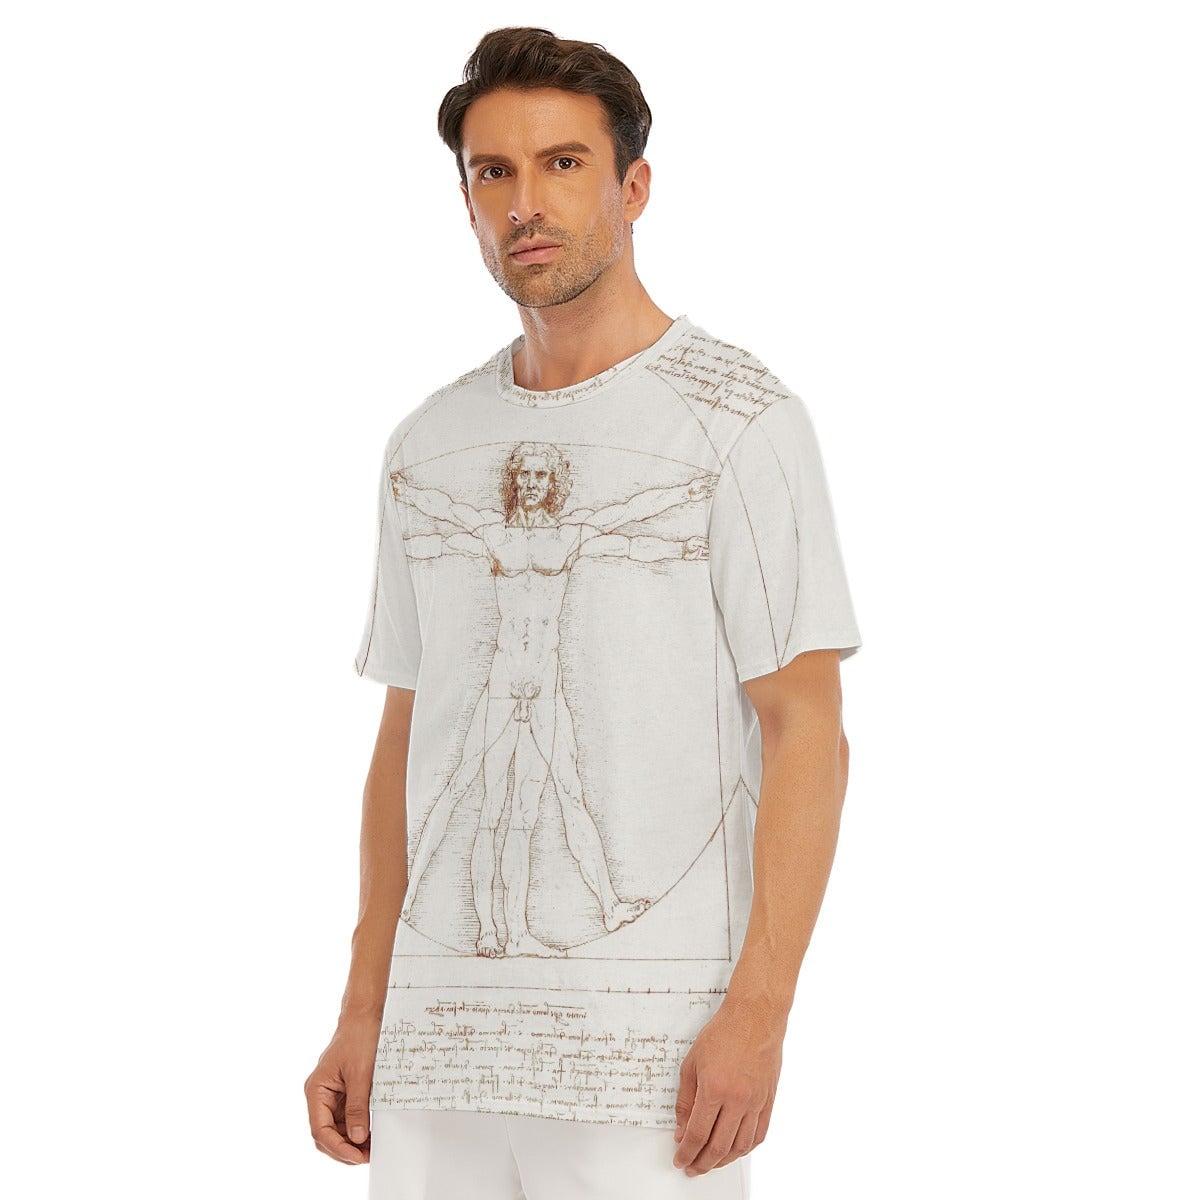 Leonardo da Vinci’s Vitruvian Man T-Shirt - Iconic Painting